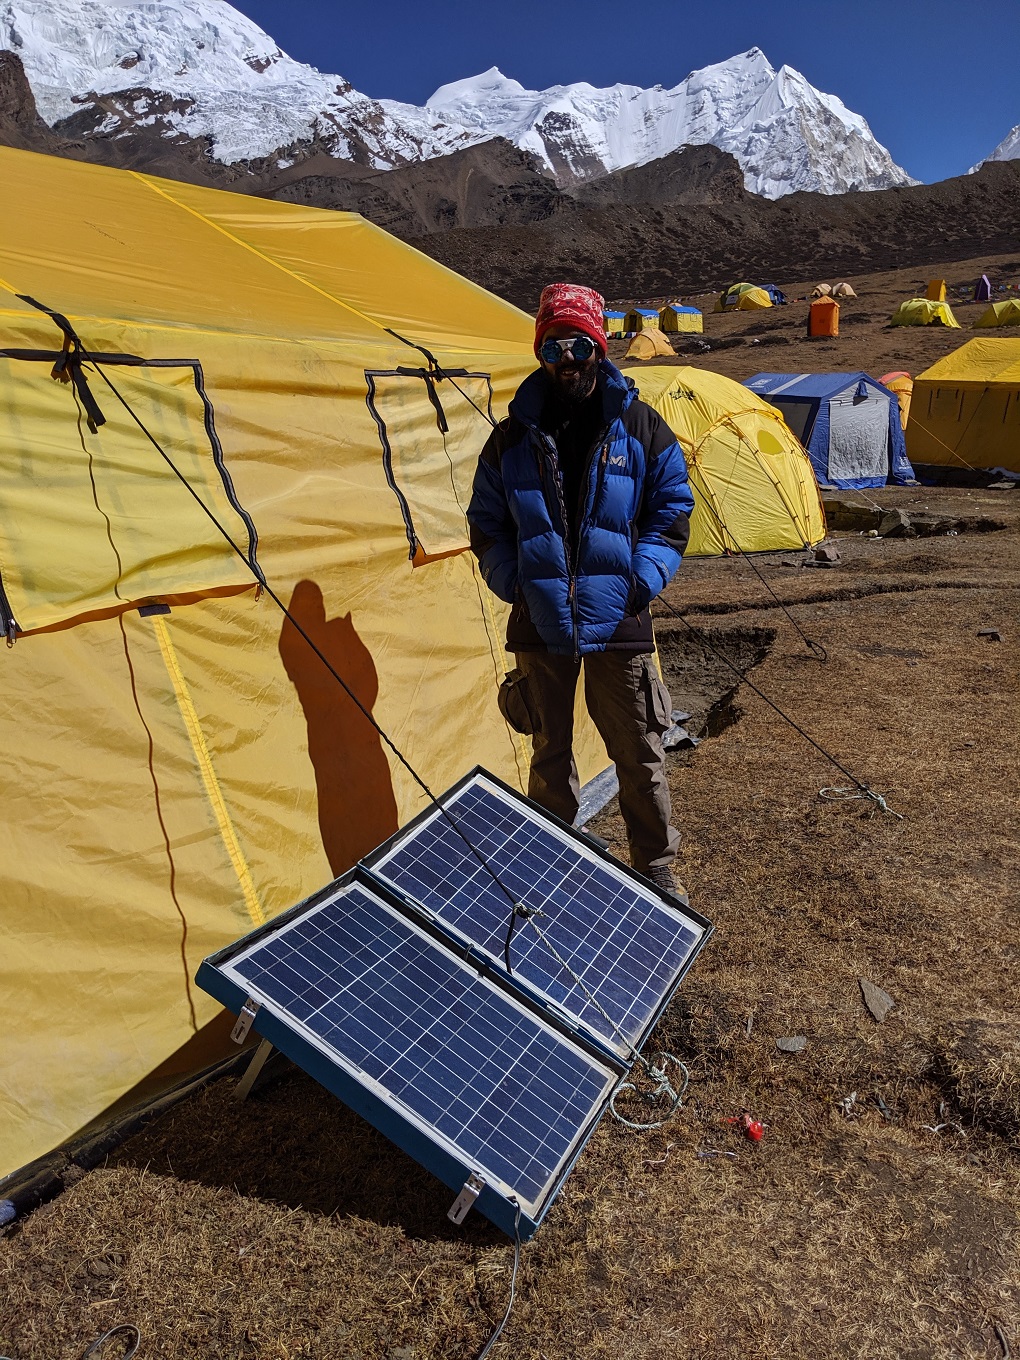 Solar panels in use at Himlung Himal base camp (2019) [image courtesy: Harshvardhan Joshi]